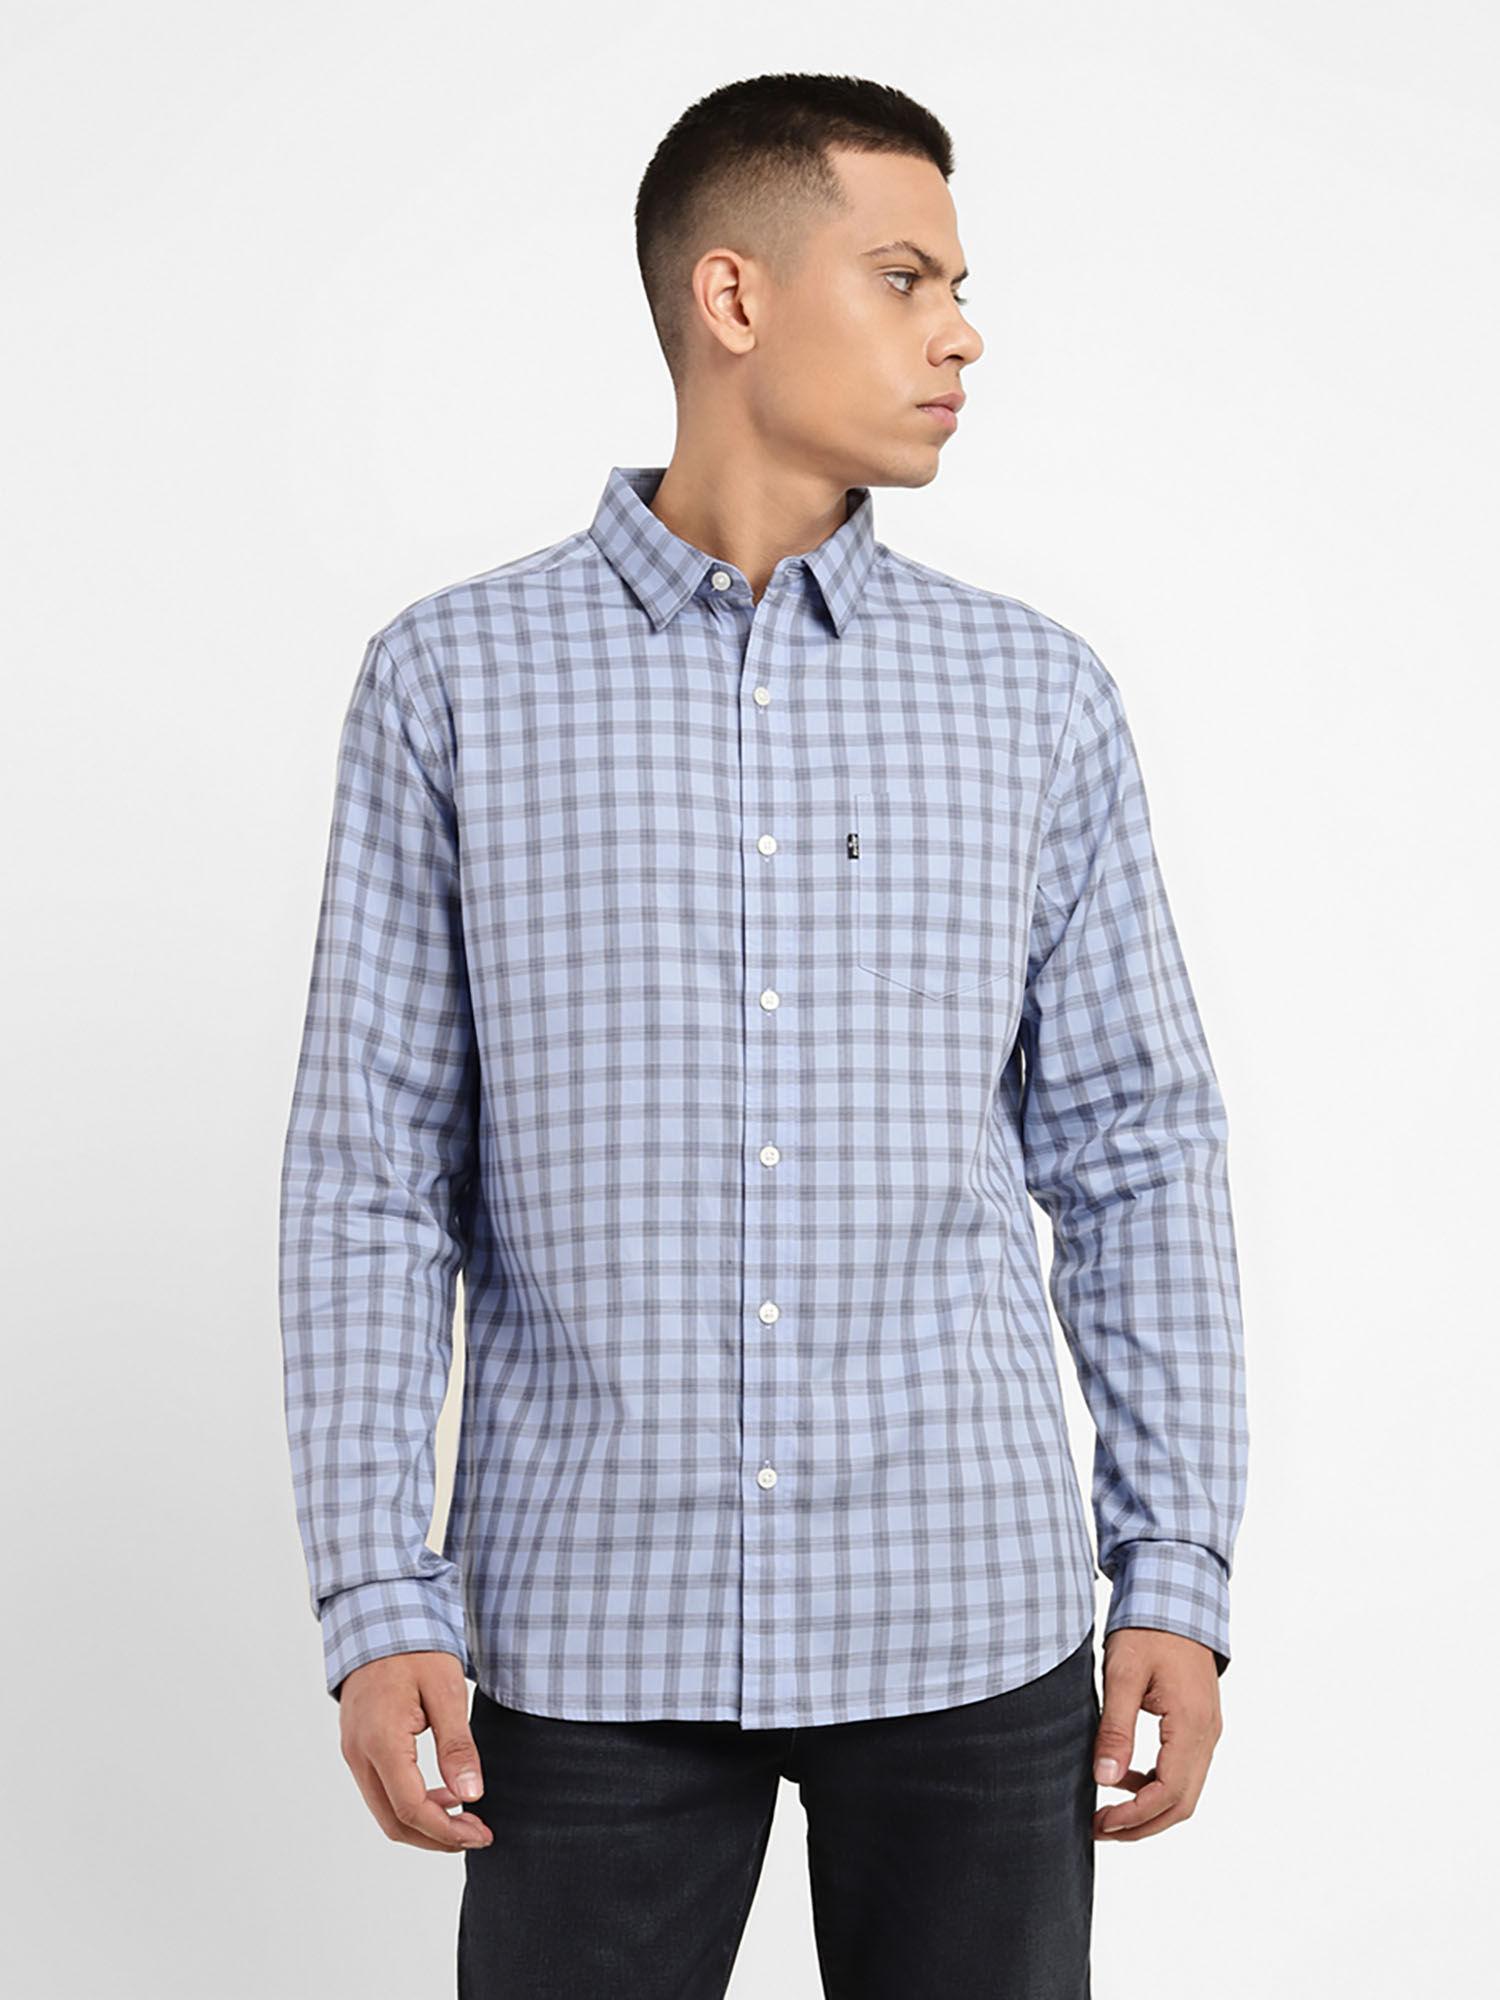 men's blue checkered slim fit shirt